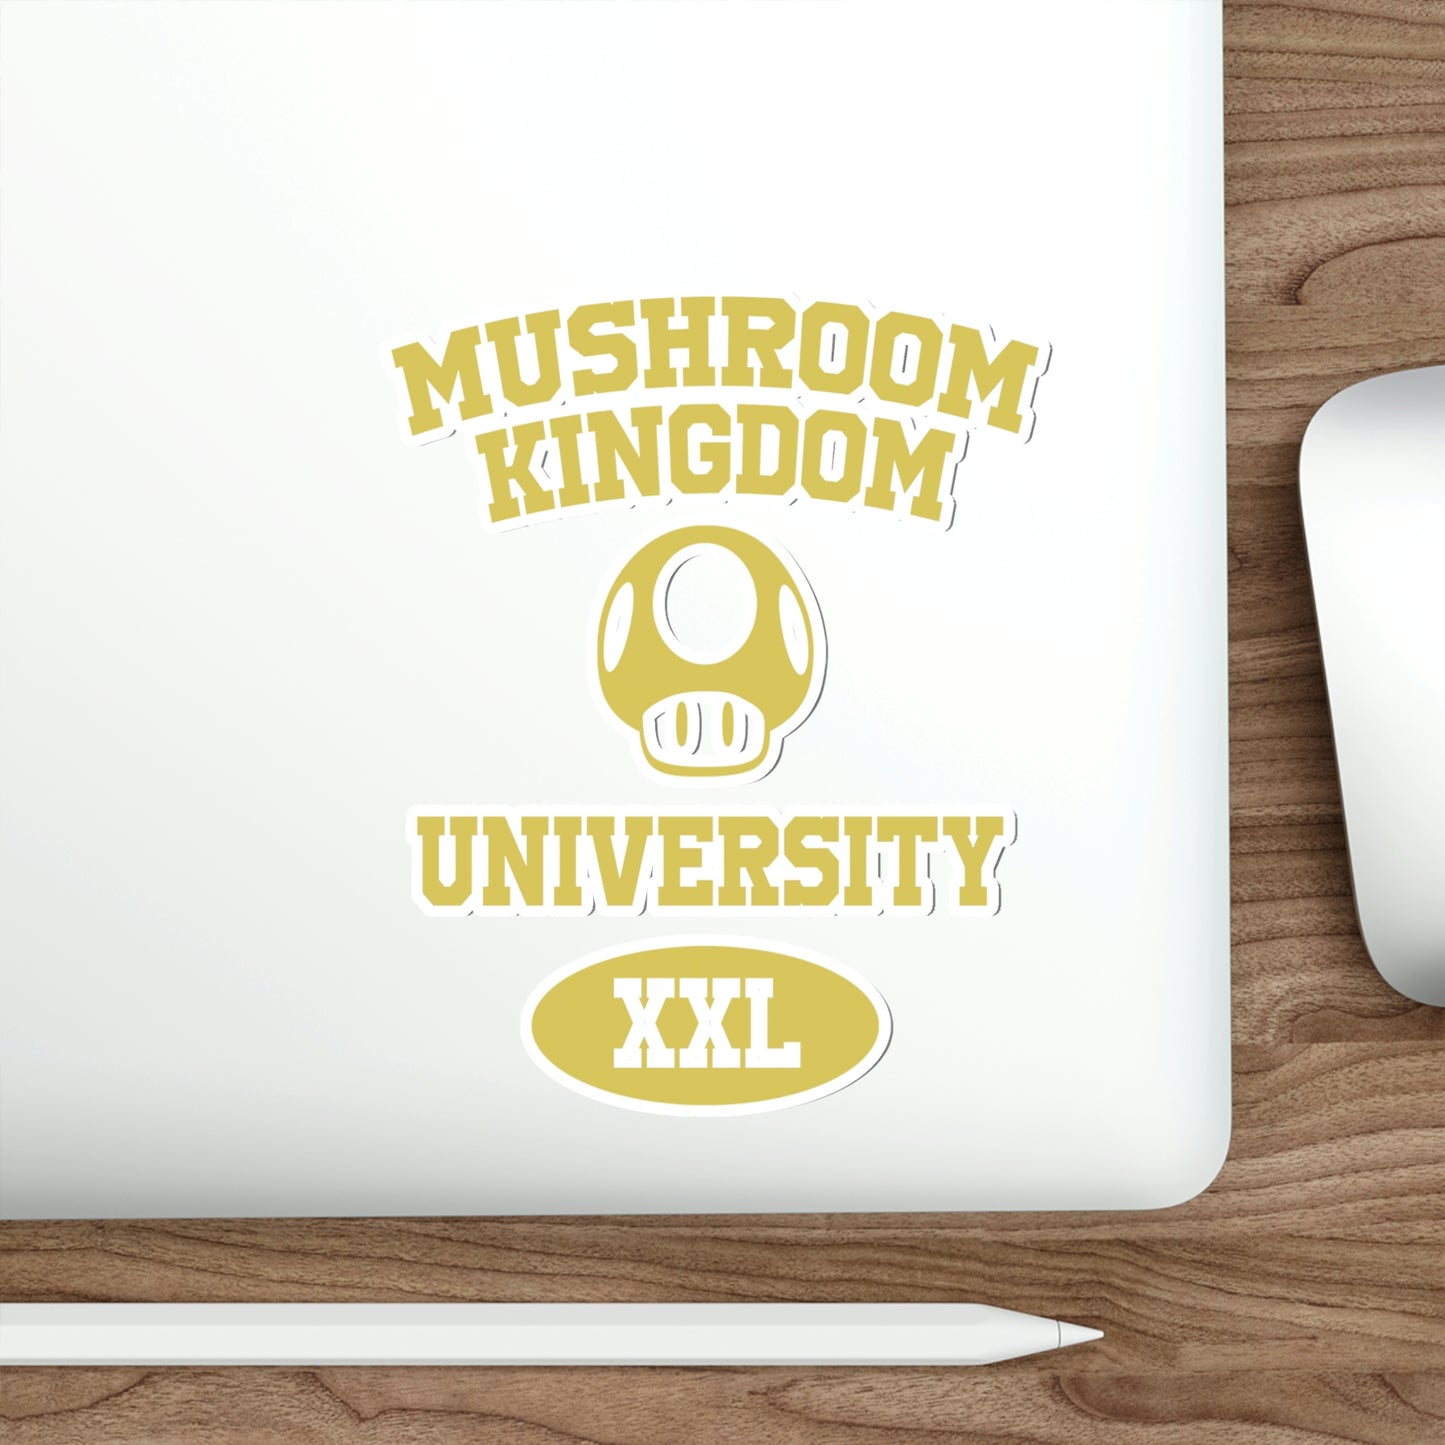 Super Mario Die-Cut Outdoor Stickers - Mushroom Kingdom University